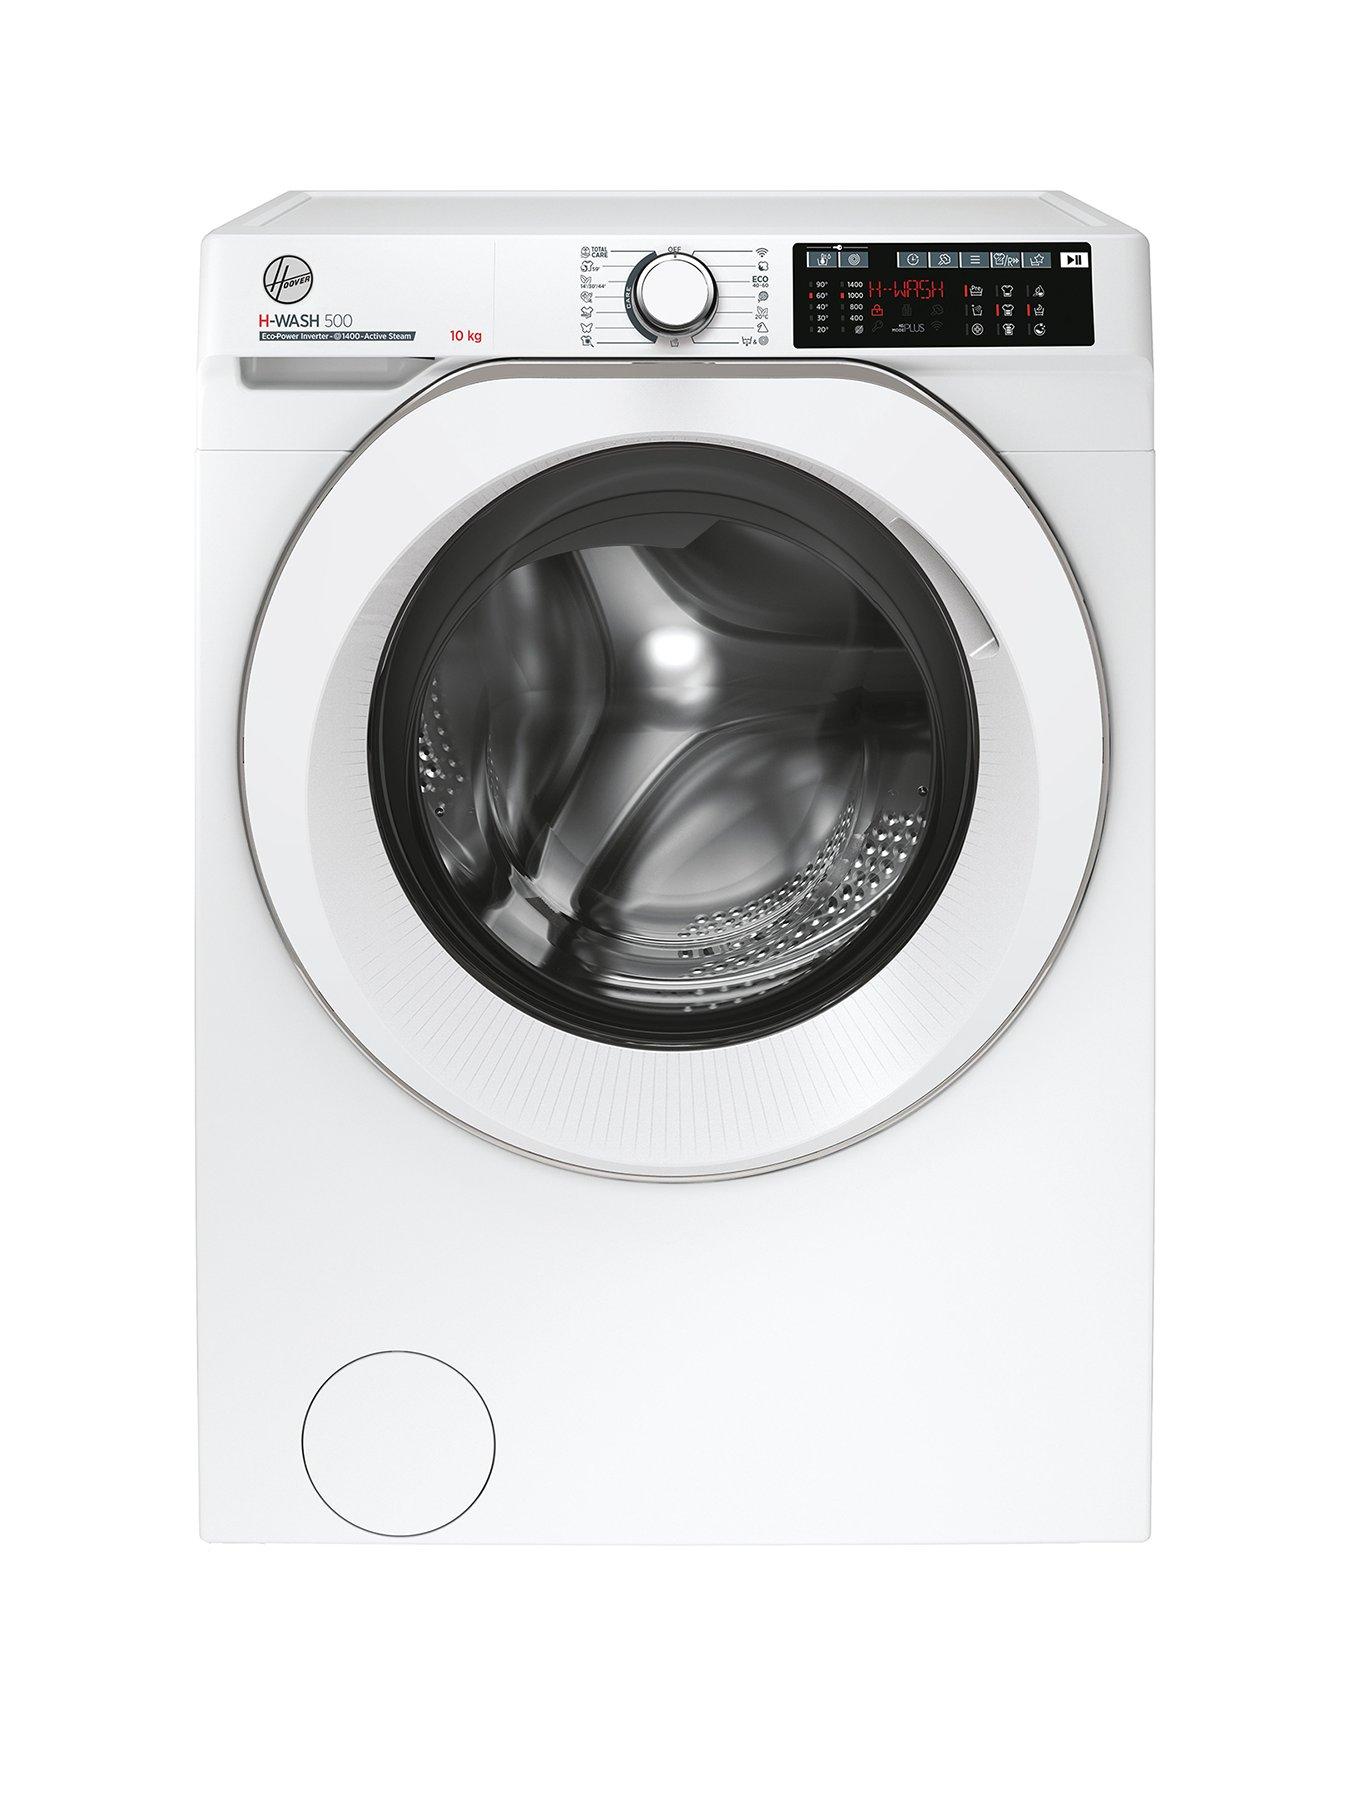 Store XP™ Portable Washer Machine